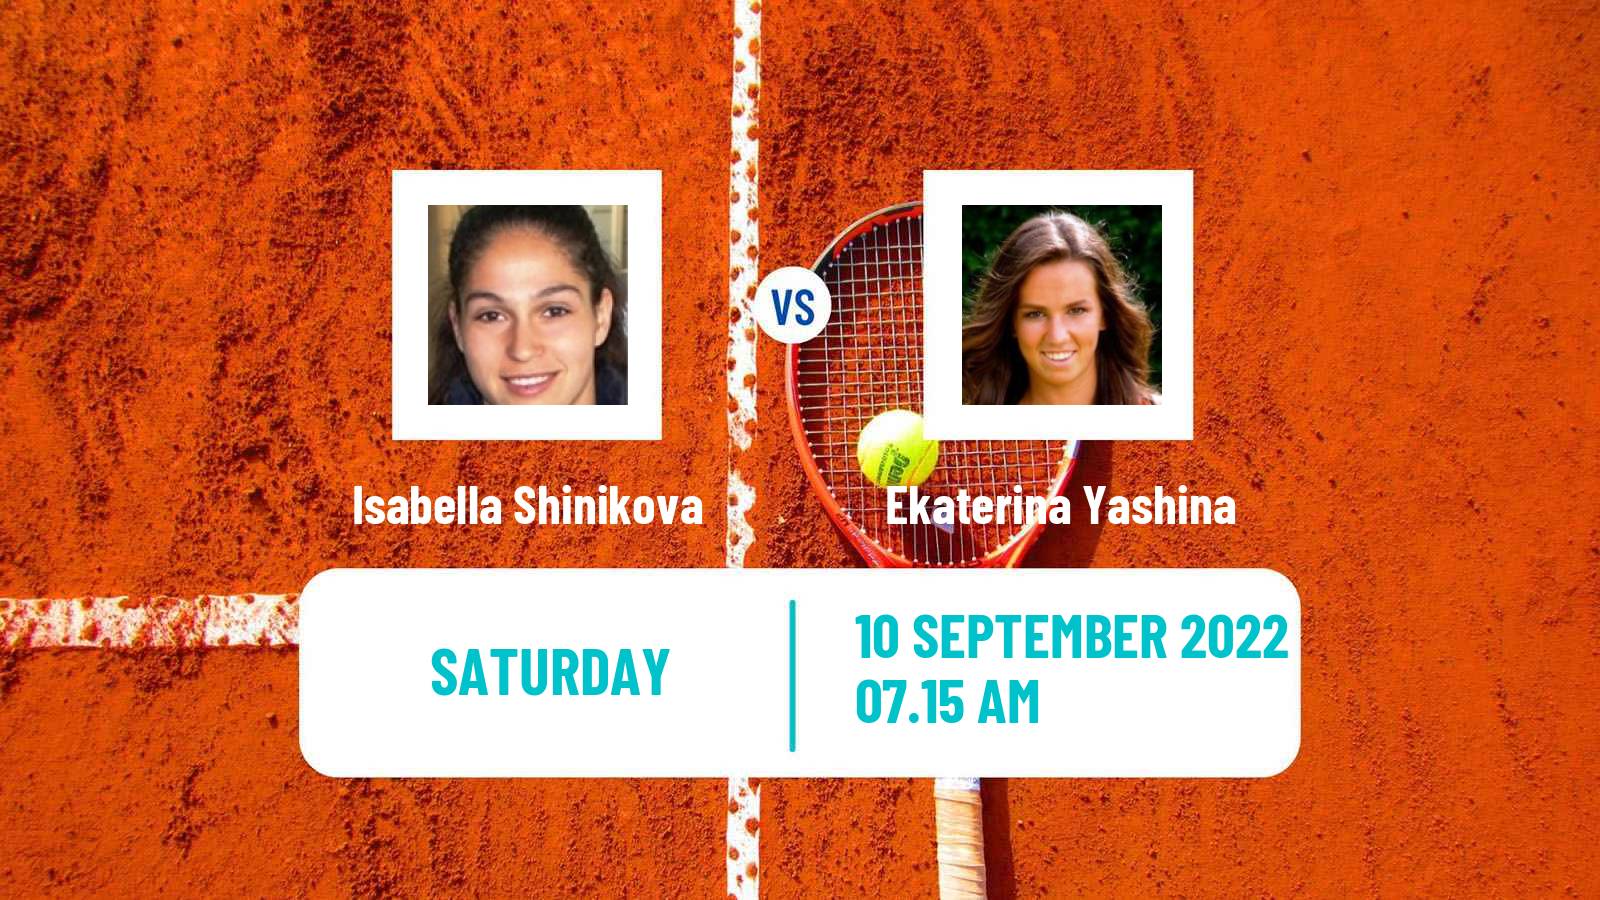 Tennis WTA Chennai Isabella Shinikova - Ekaterina Yashina